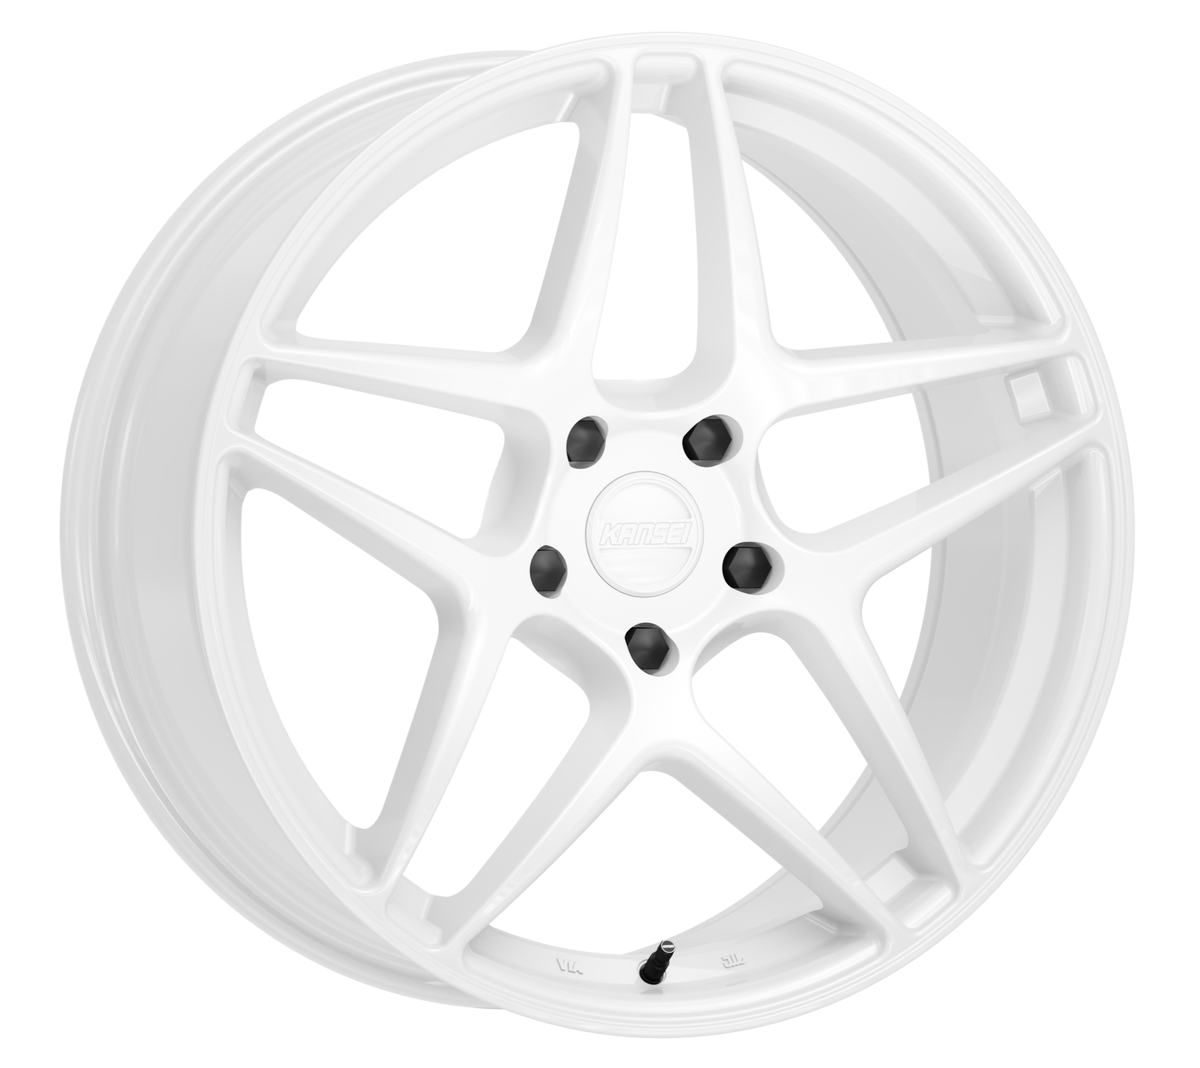 K15W ASTRO Wheel, Size: 18" x 10.50", Bolt Pattern: 5 x 120 mm, Backspace: 6.22" [Finish: Gloss White]